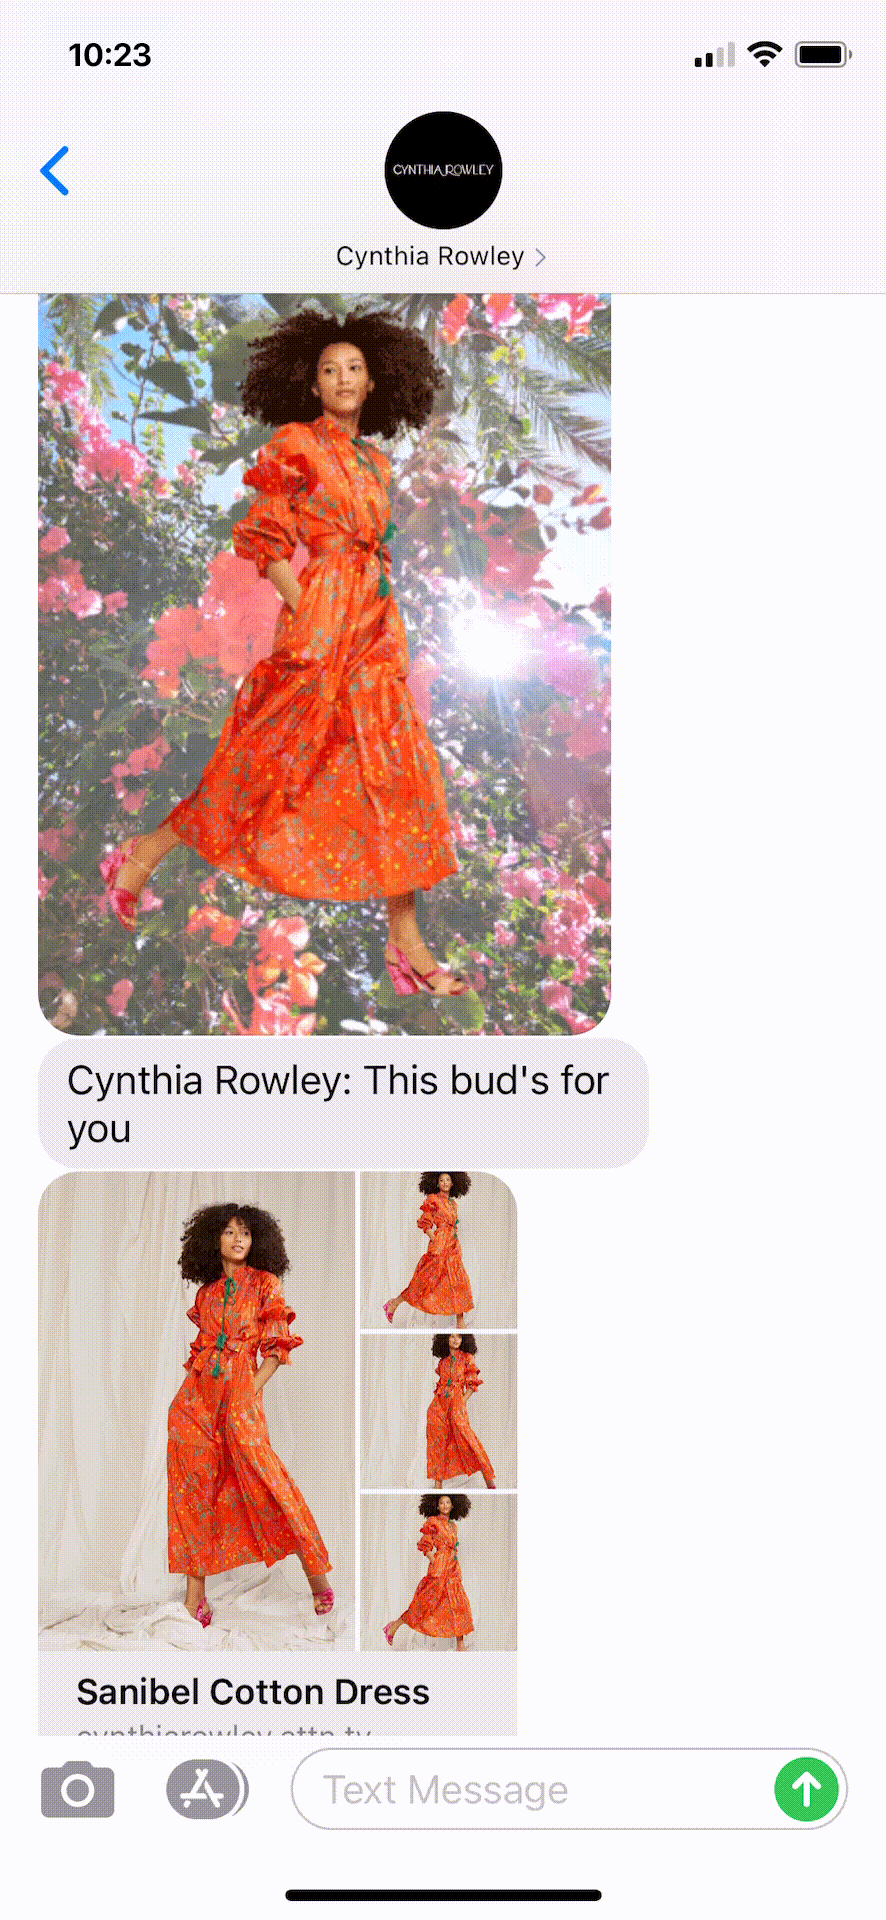 Cynthia-Rowley-Text-Message-Marketing-Example-03.18.2021